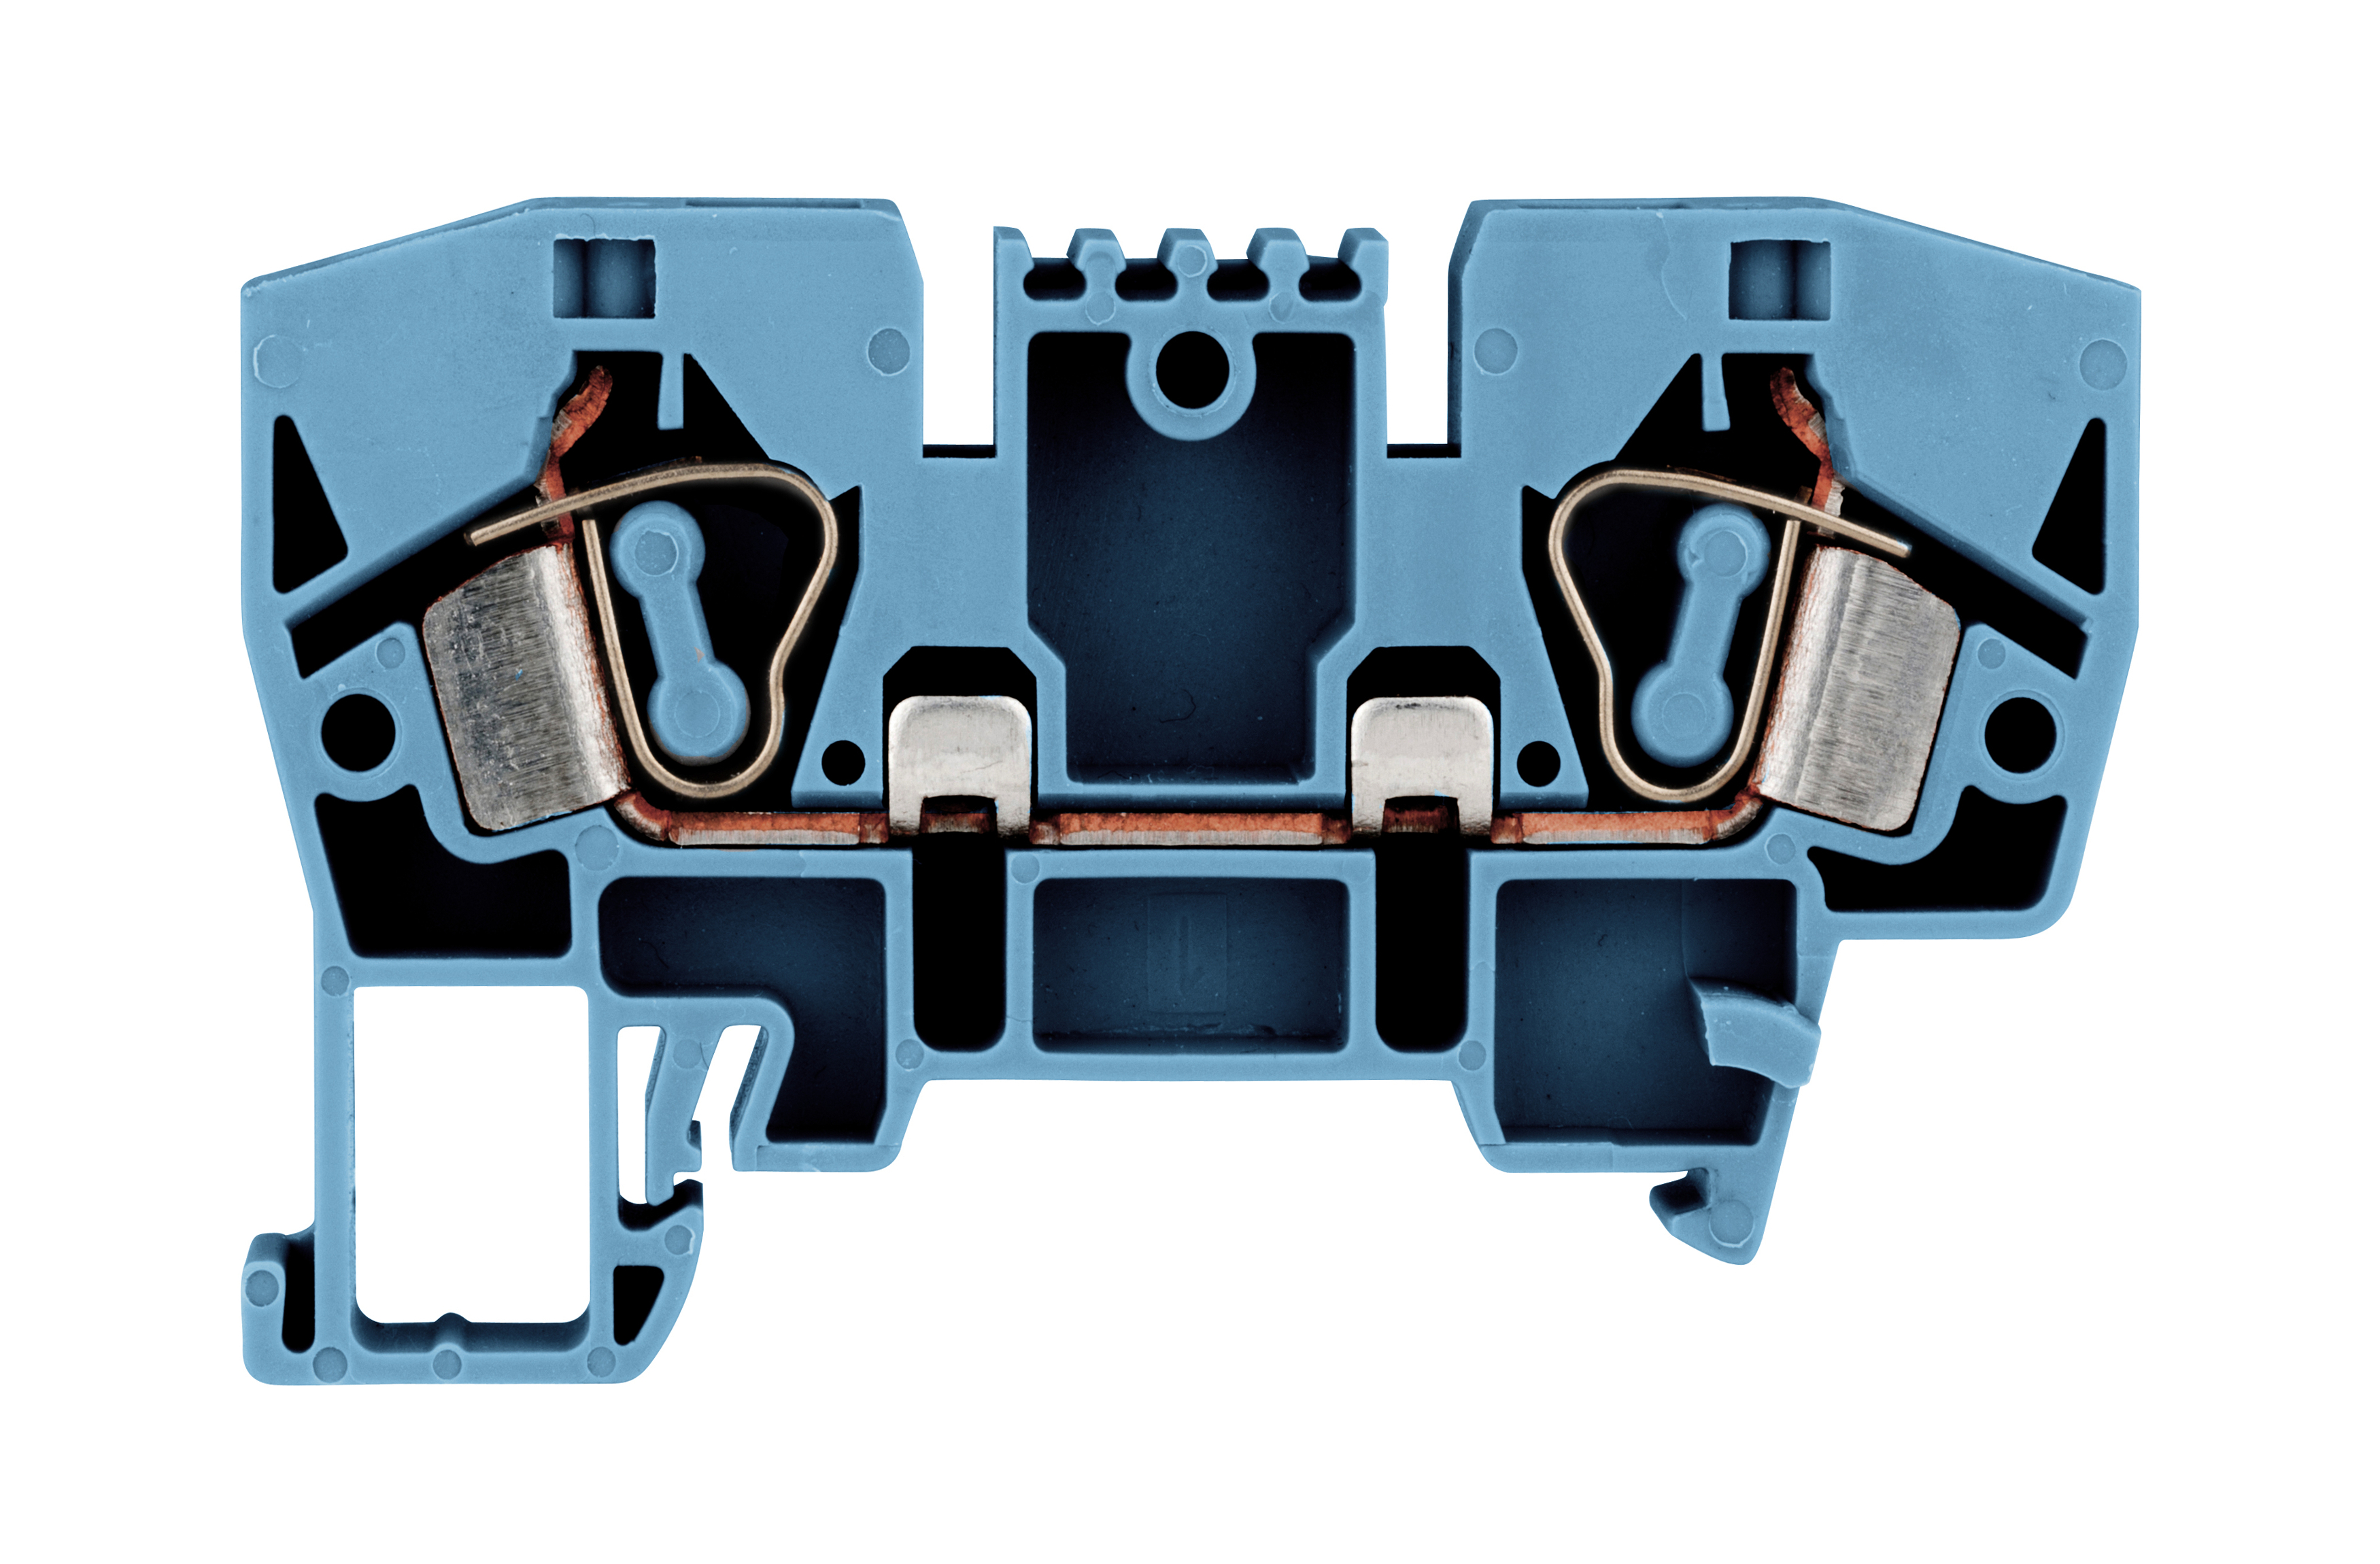 Foto: Federkraftklemme 6mm², Type YBK 6 blau (c) Schrack